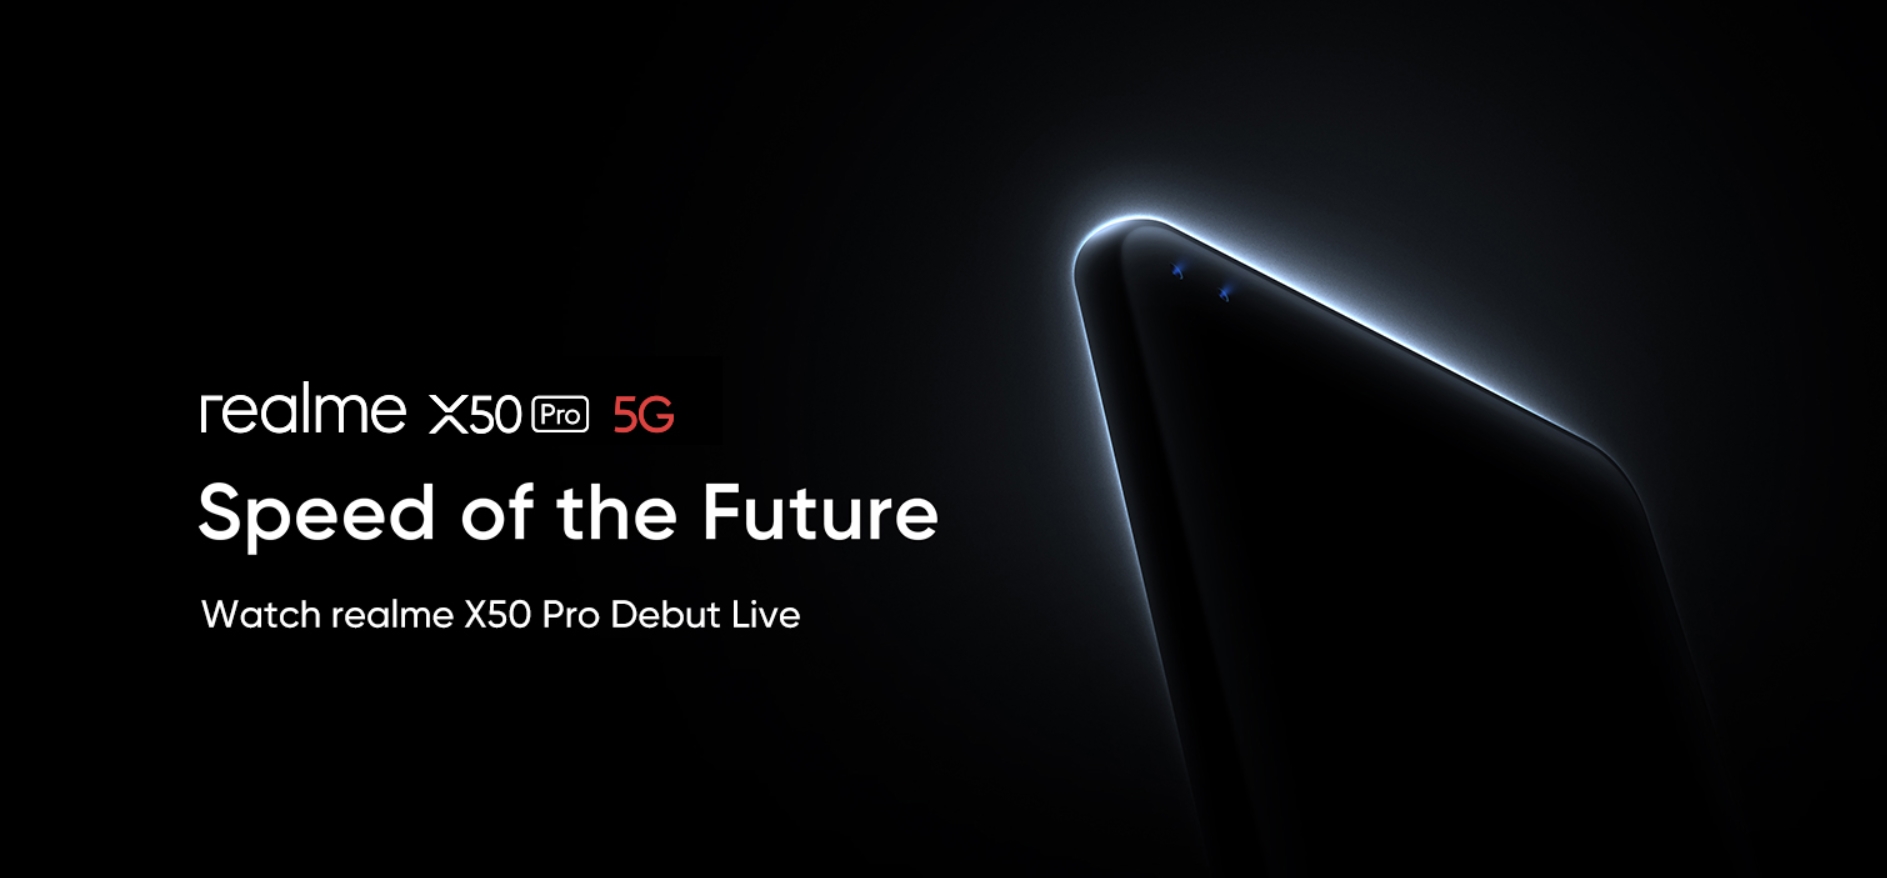 Realme xác nhận smartphone X50 Pro 5G sẽ có 4 camera sau kèm zoom 20X